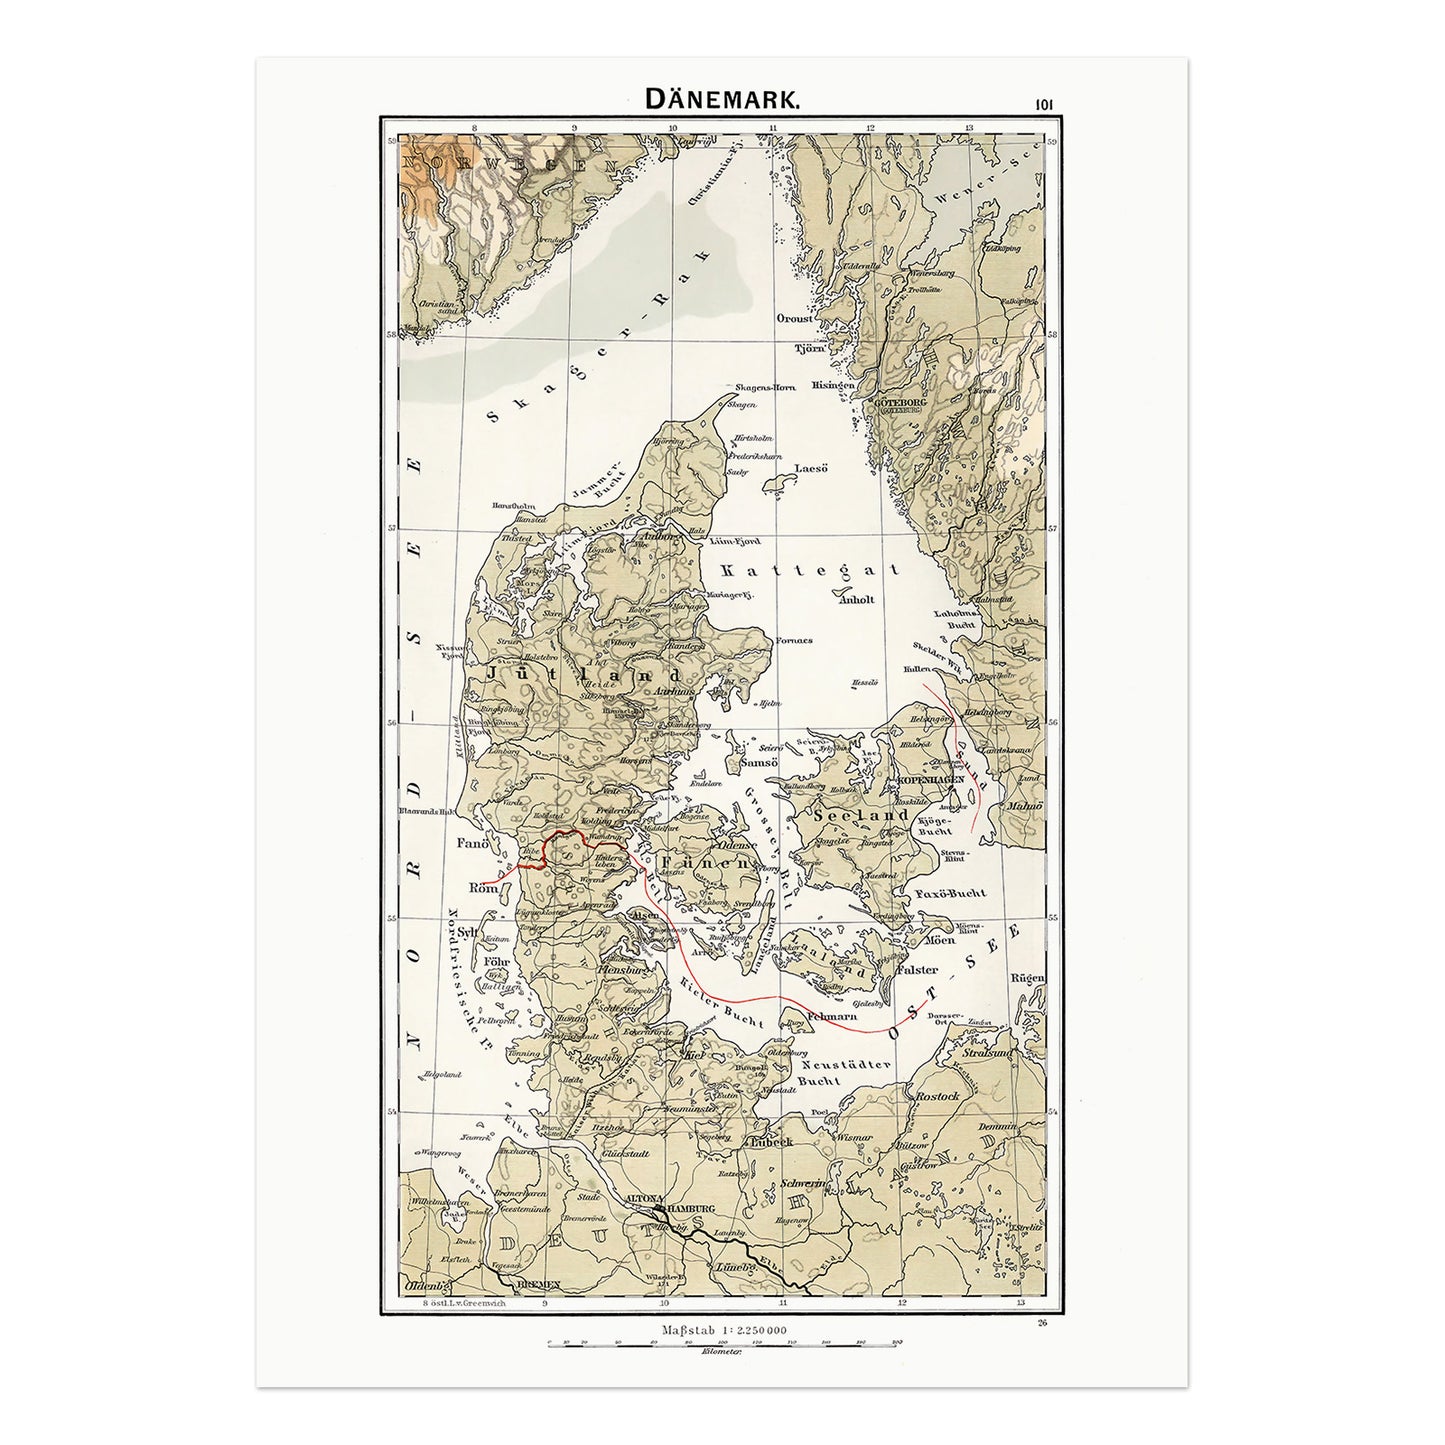 Map of Denmark from an old school atlas, 1896